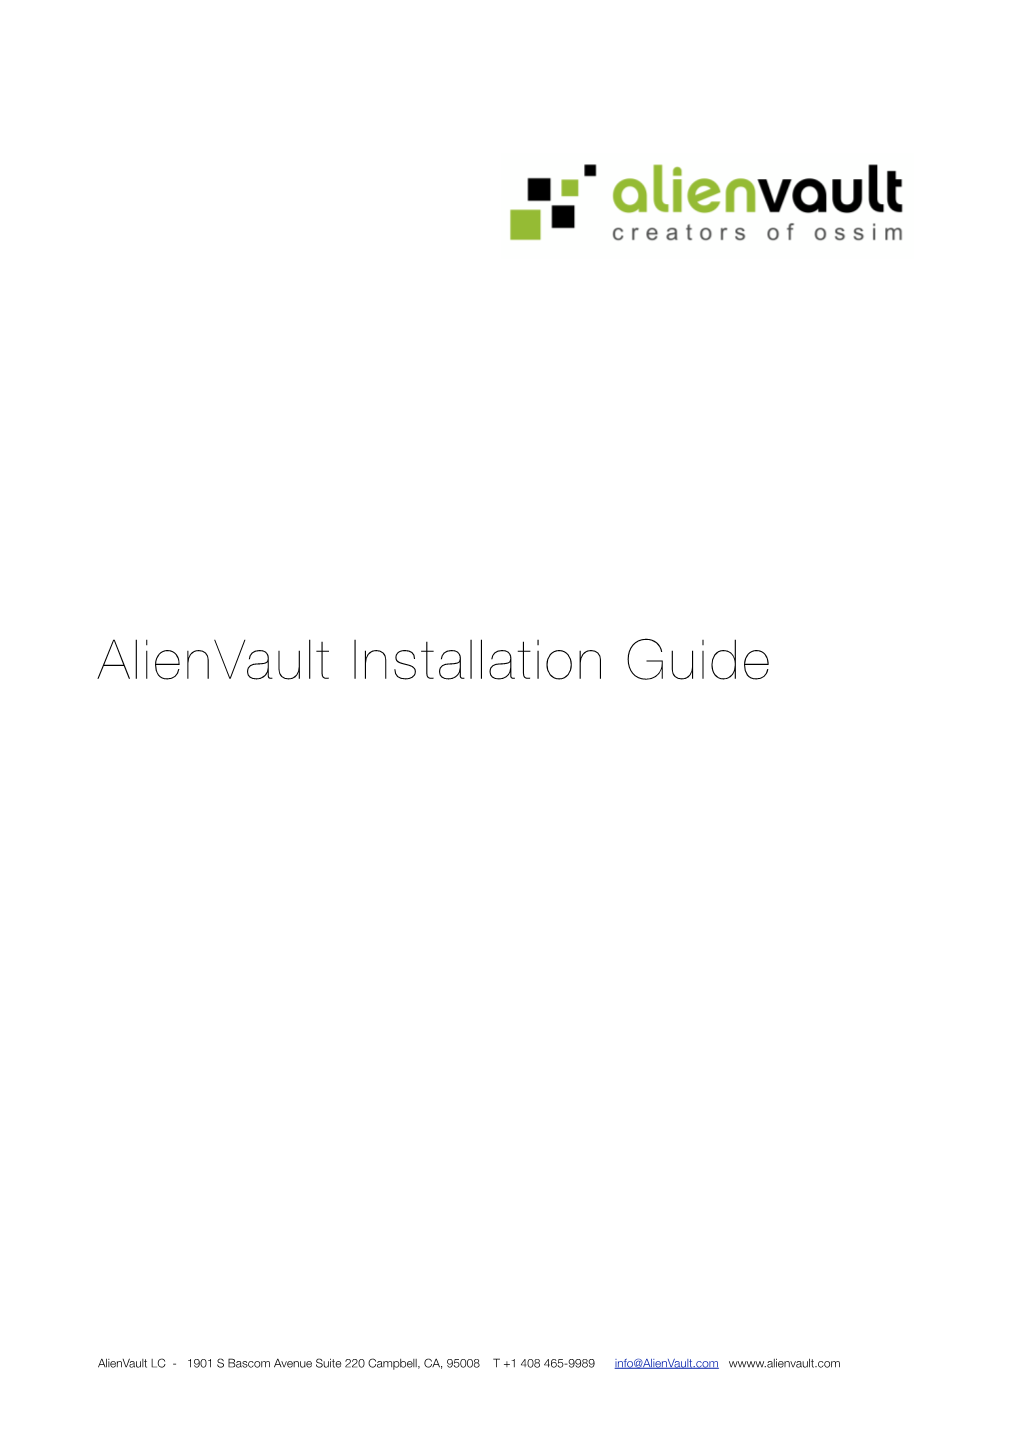 Alienvault OSSIM Installation Guide